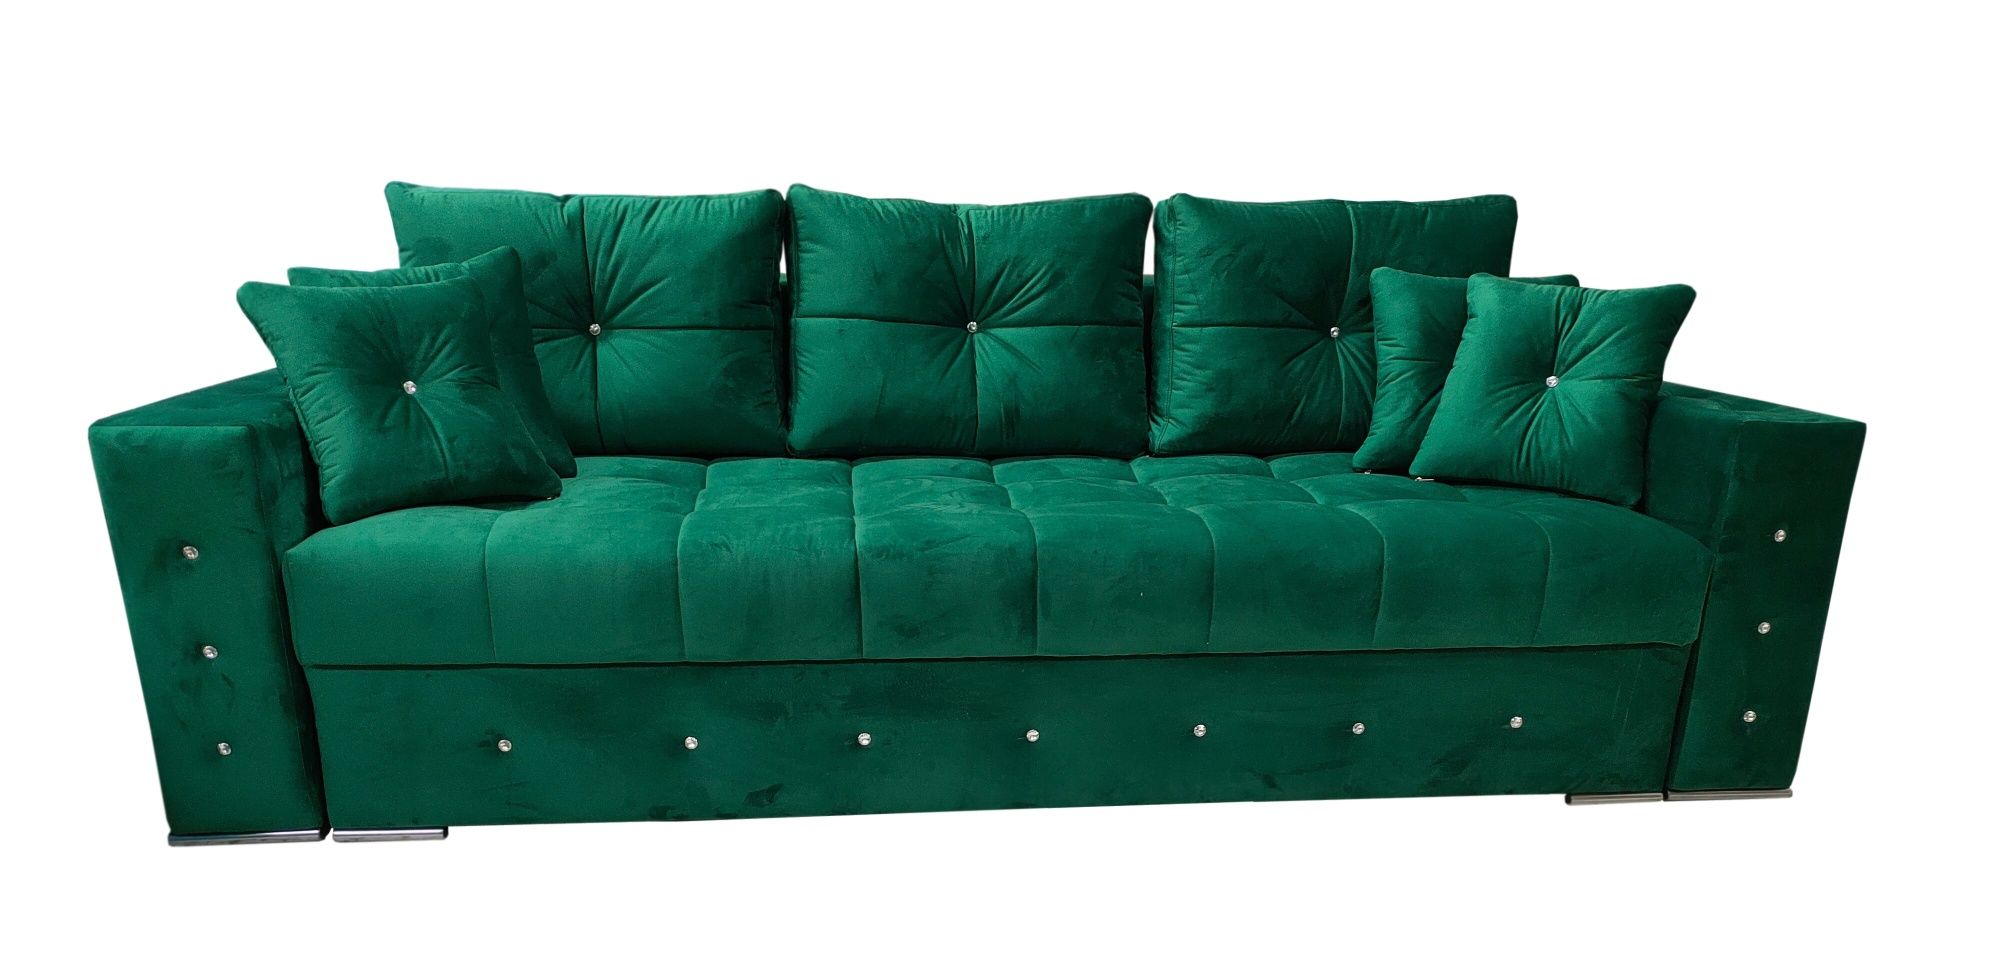 Samara pik glamour rozkładana sofa producent mebli